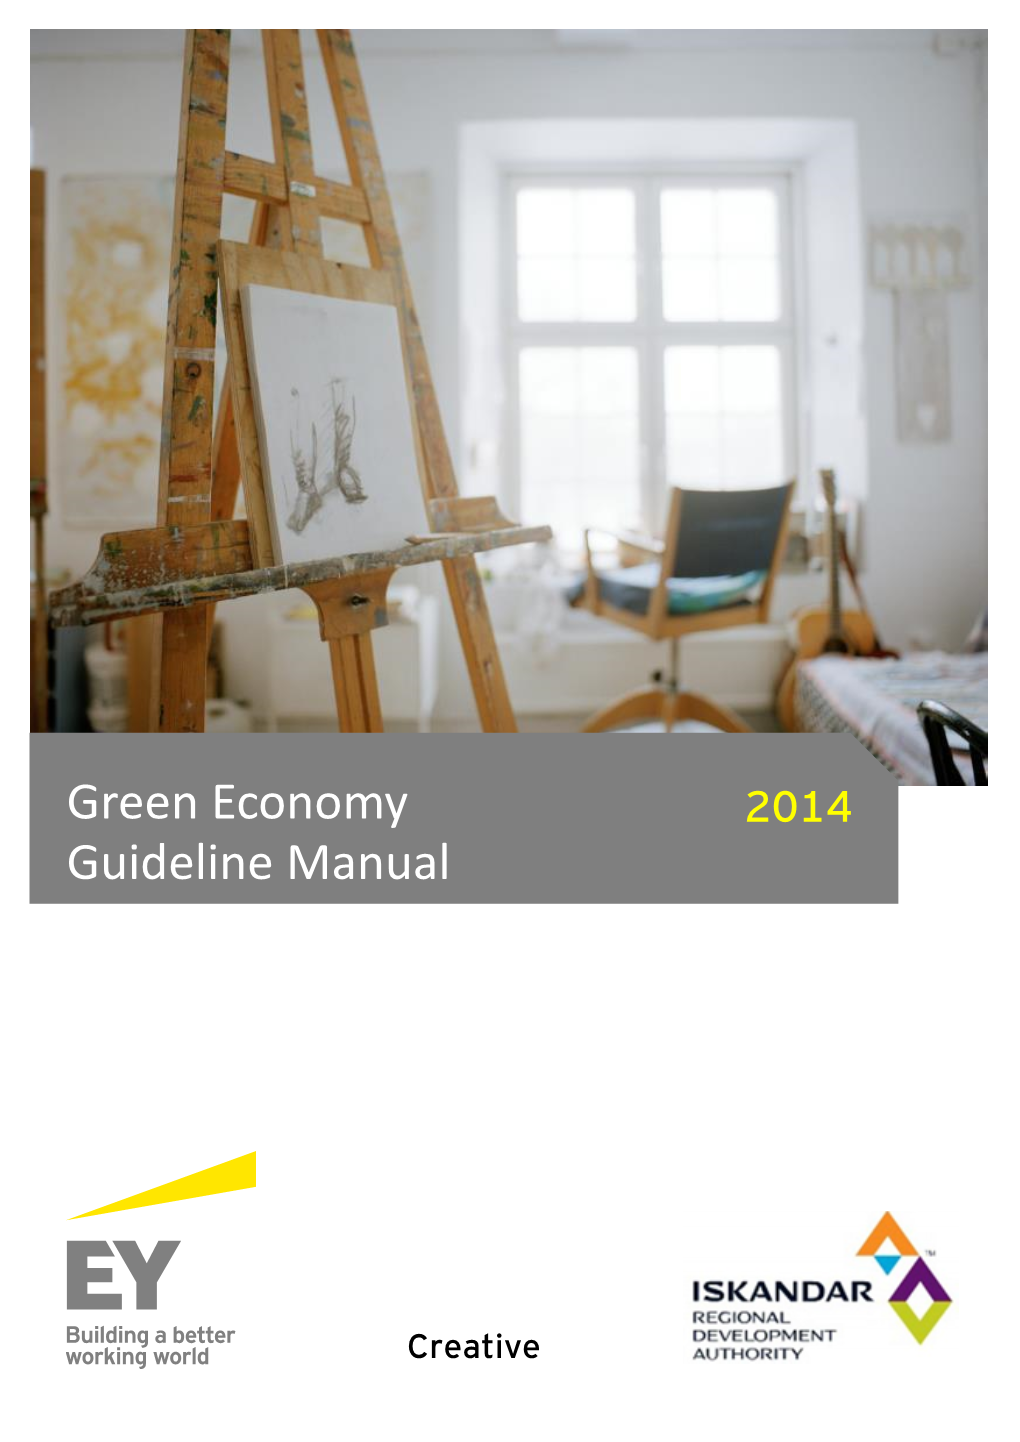 Green Economy Guideline Manual